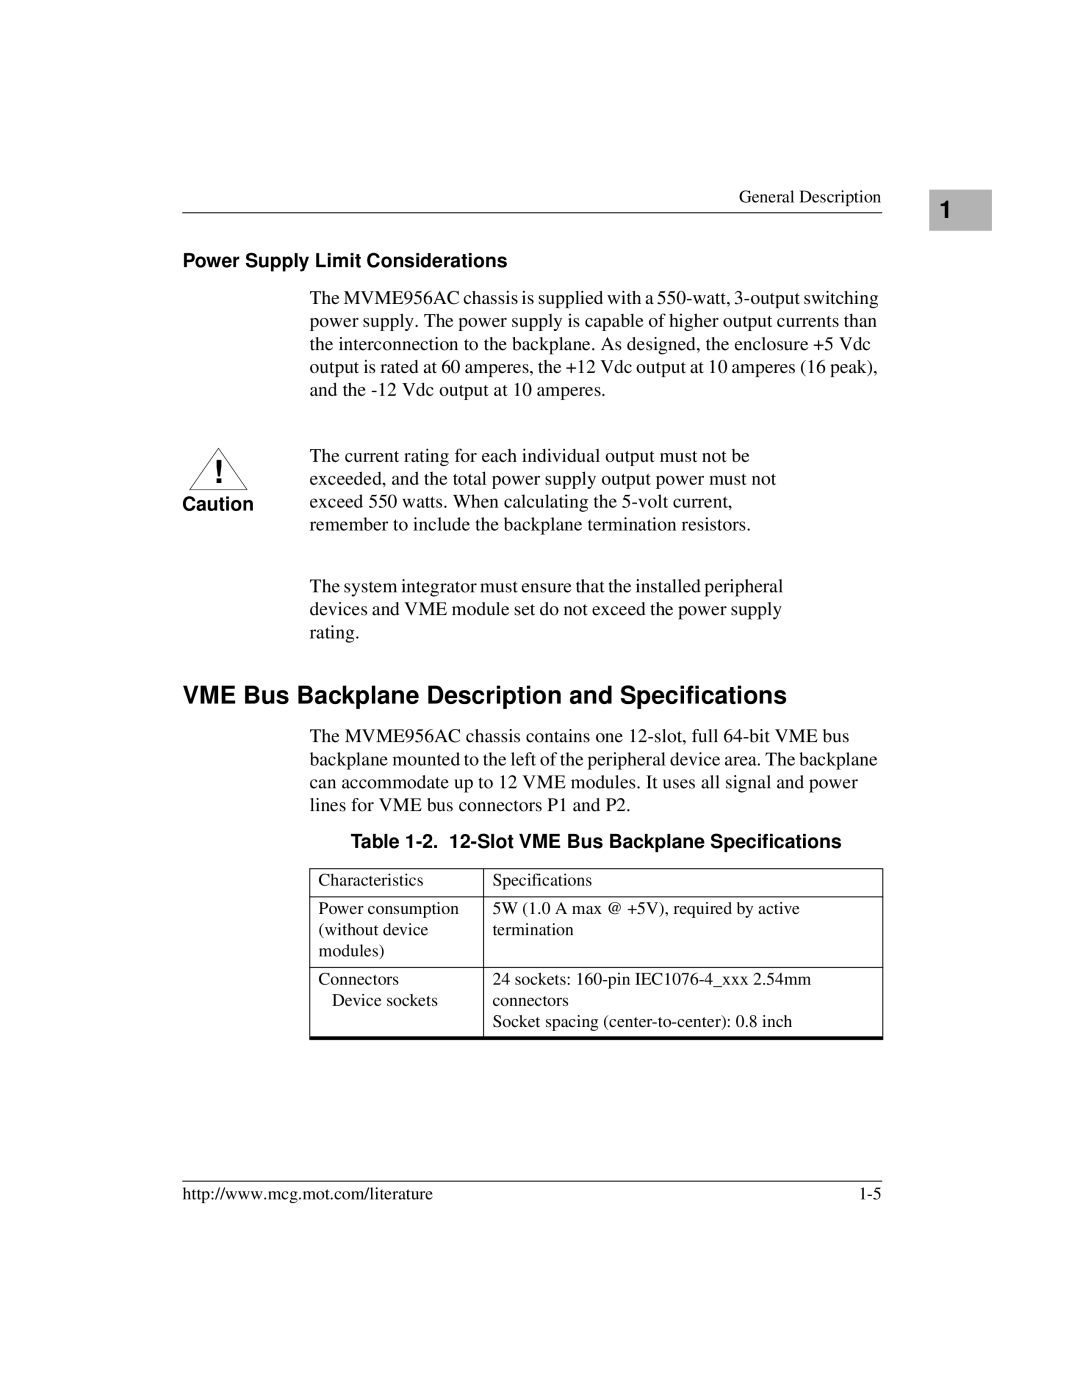 Motorola MVME956UM2, MVME956AC VME Bus Backplane Description and Specifications, Power Supply Limit Considerations 